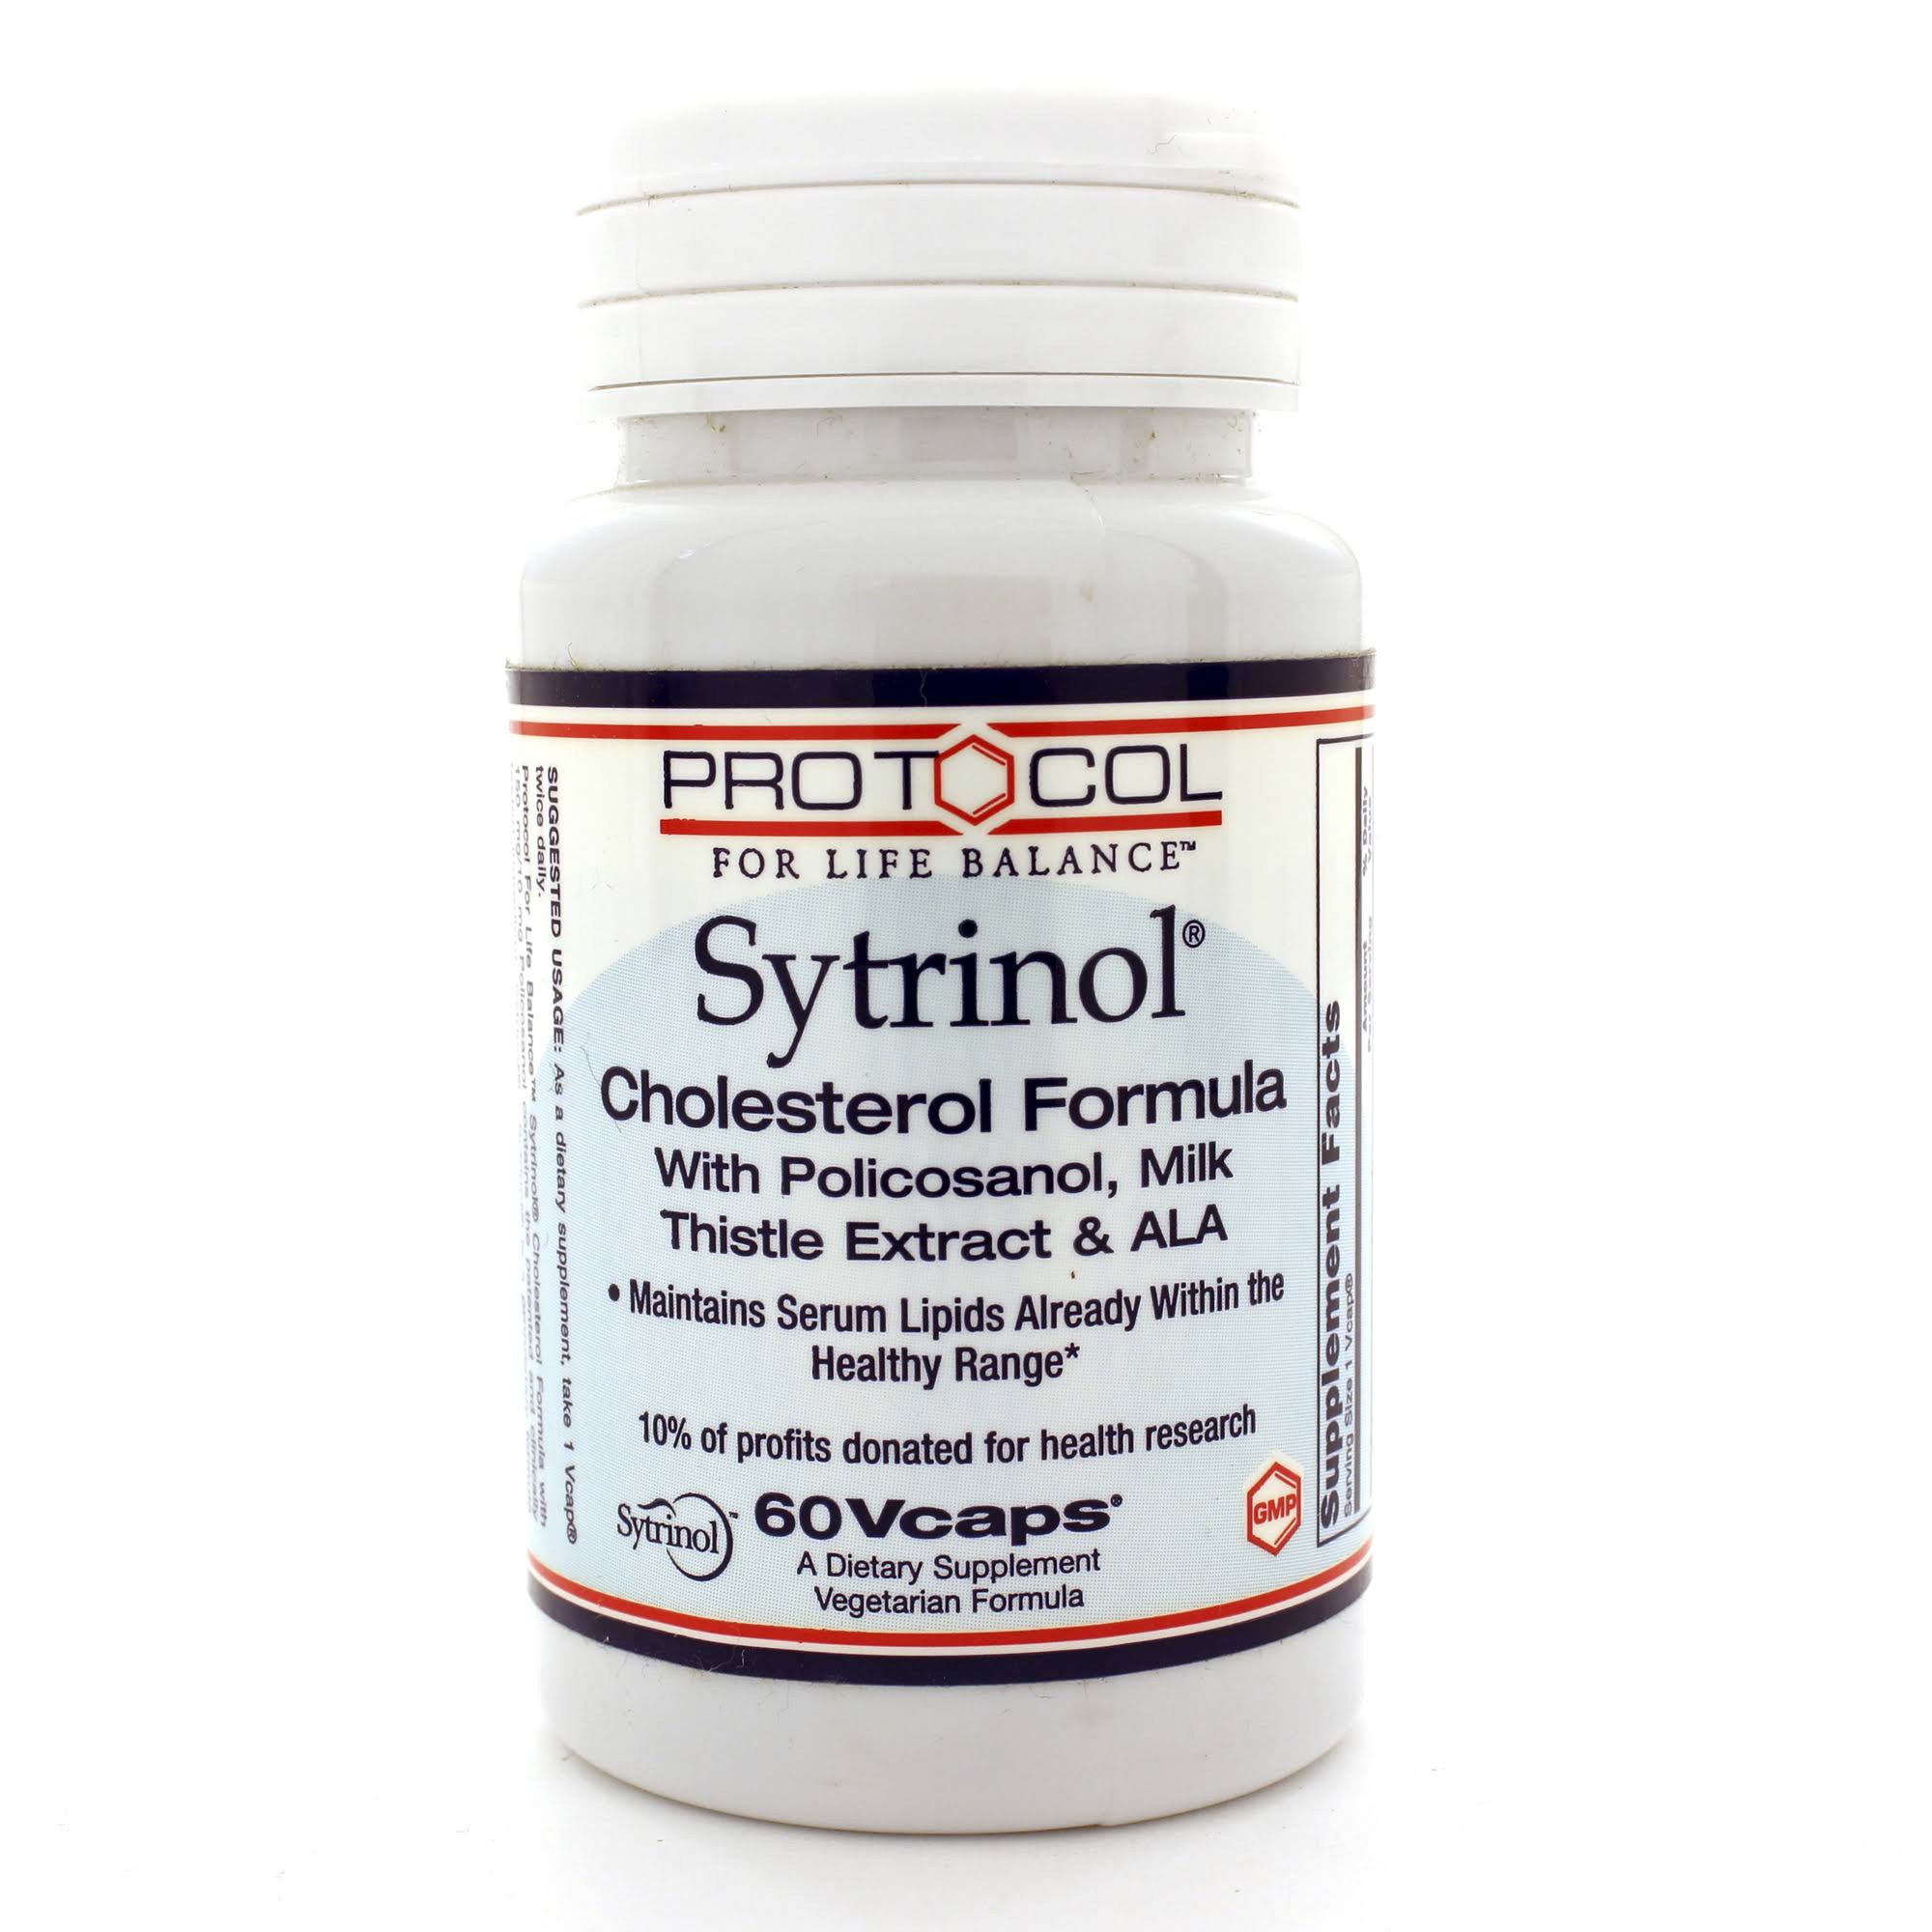 Protocol for Life Balance Sytrinol Cholesterol Formula - 60 VCapsules